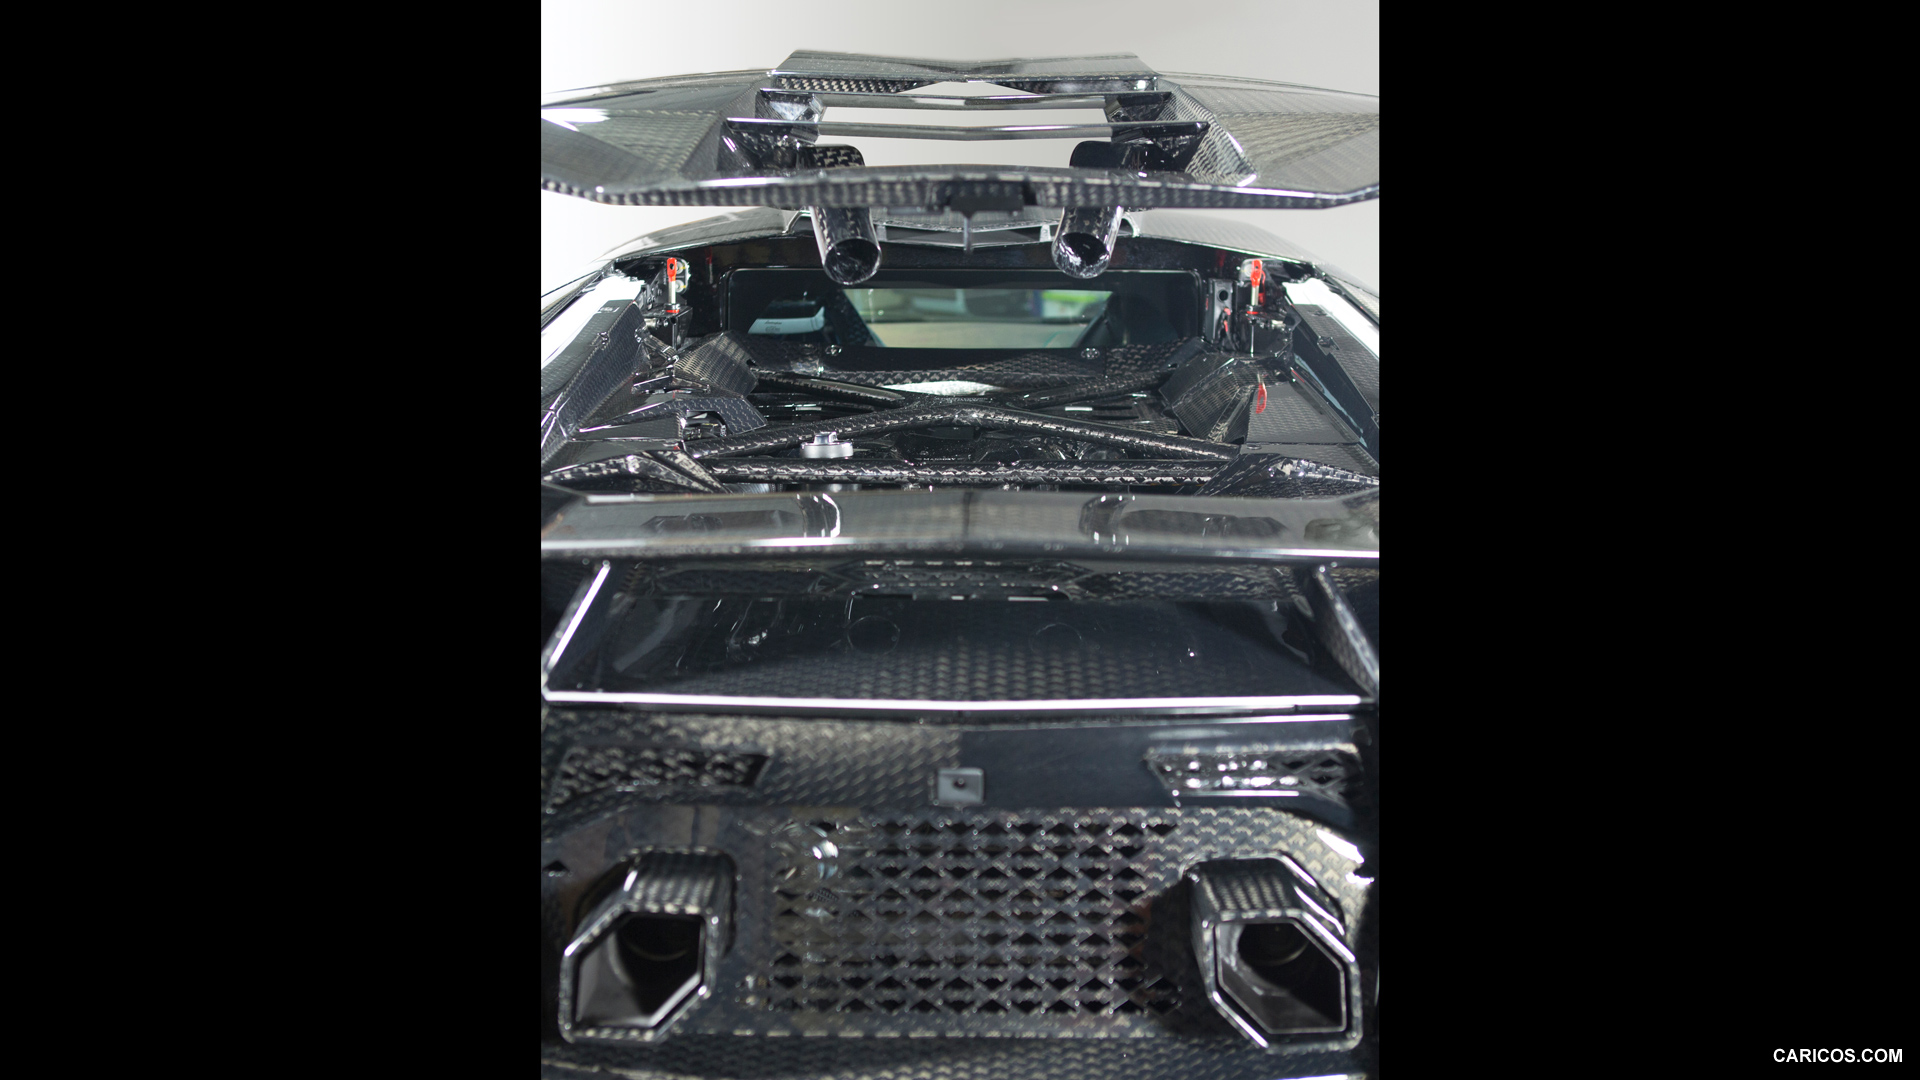 2014 Mansory Carbonado GT based on Lamborghini Aventador  - Detail, #7 of 8